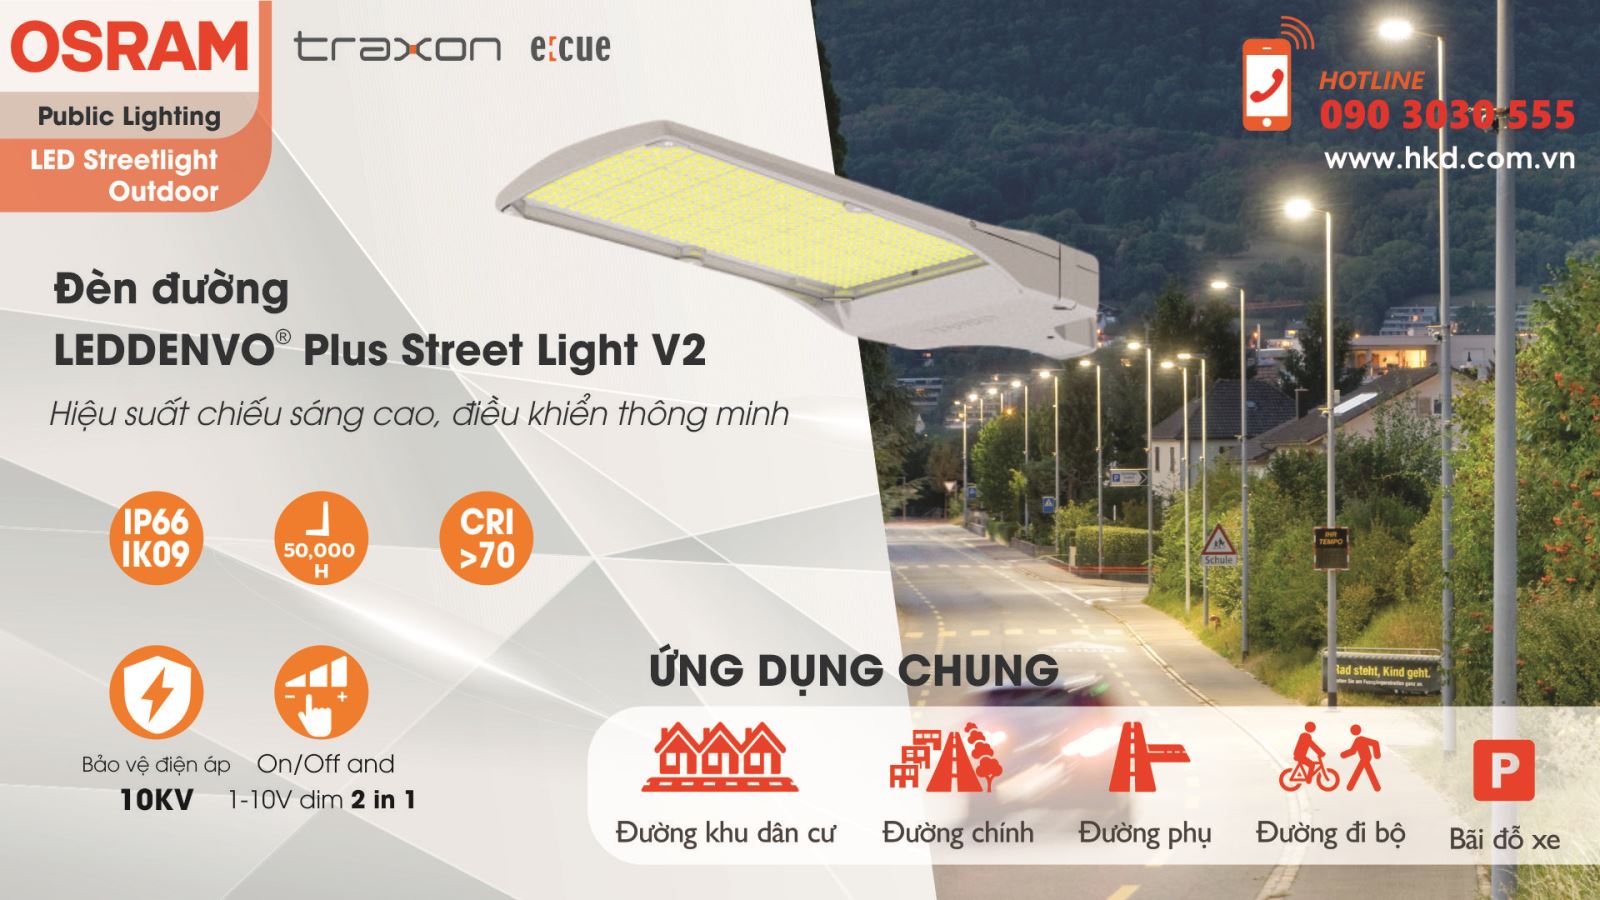 Đèn đường LEDENVO PLUS Street Light V2 OSRAM